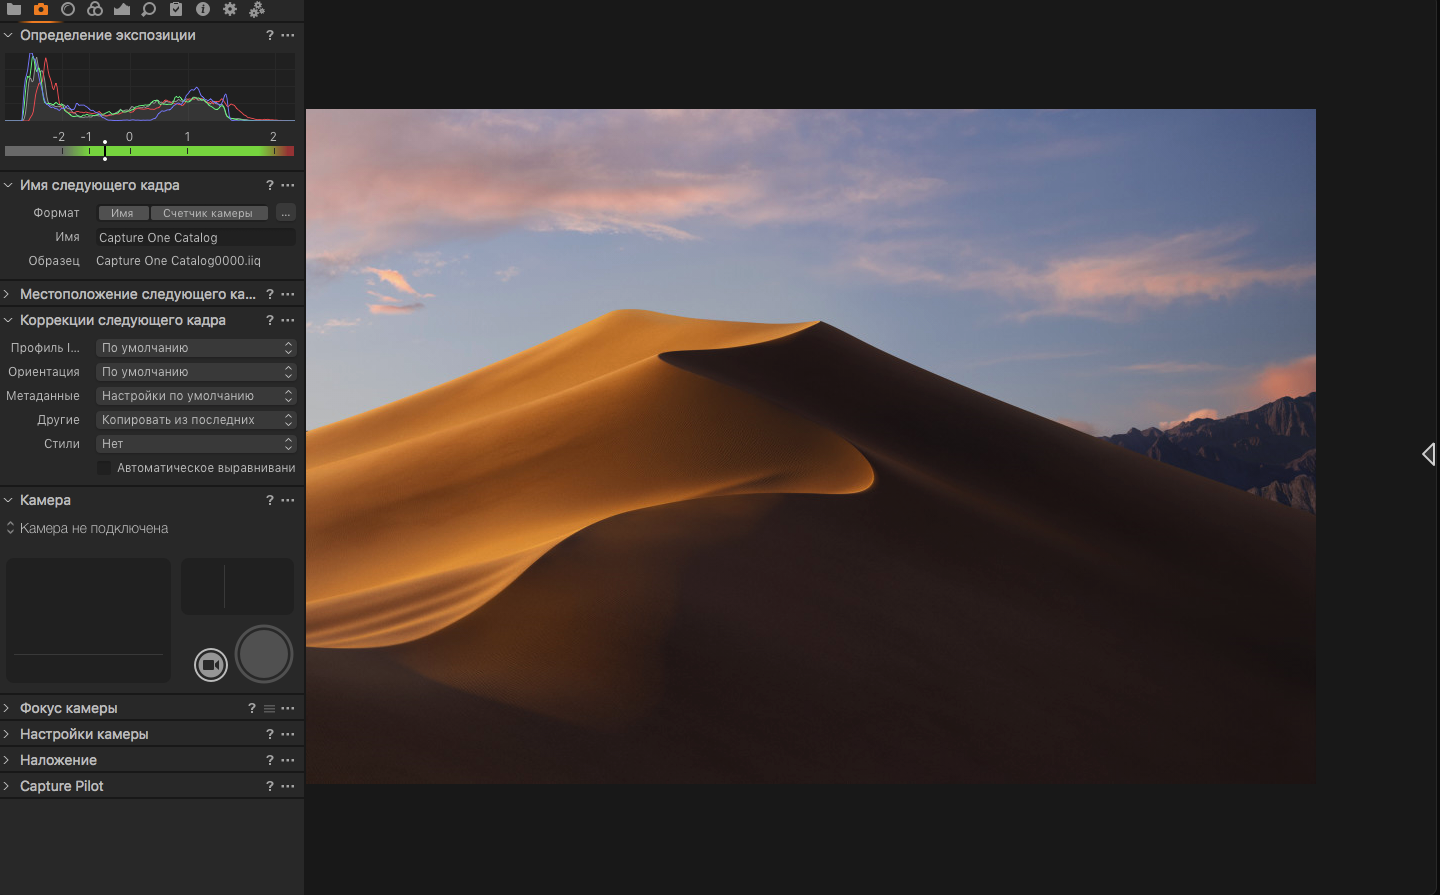 Capture One 23 Pro for Mac v16.3.7.10 RAW转换和图像编辑工具 破解版-1